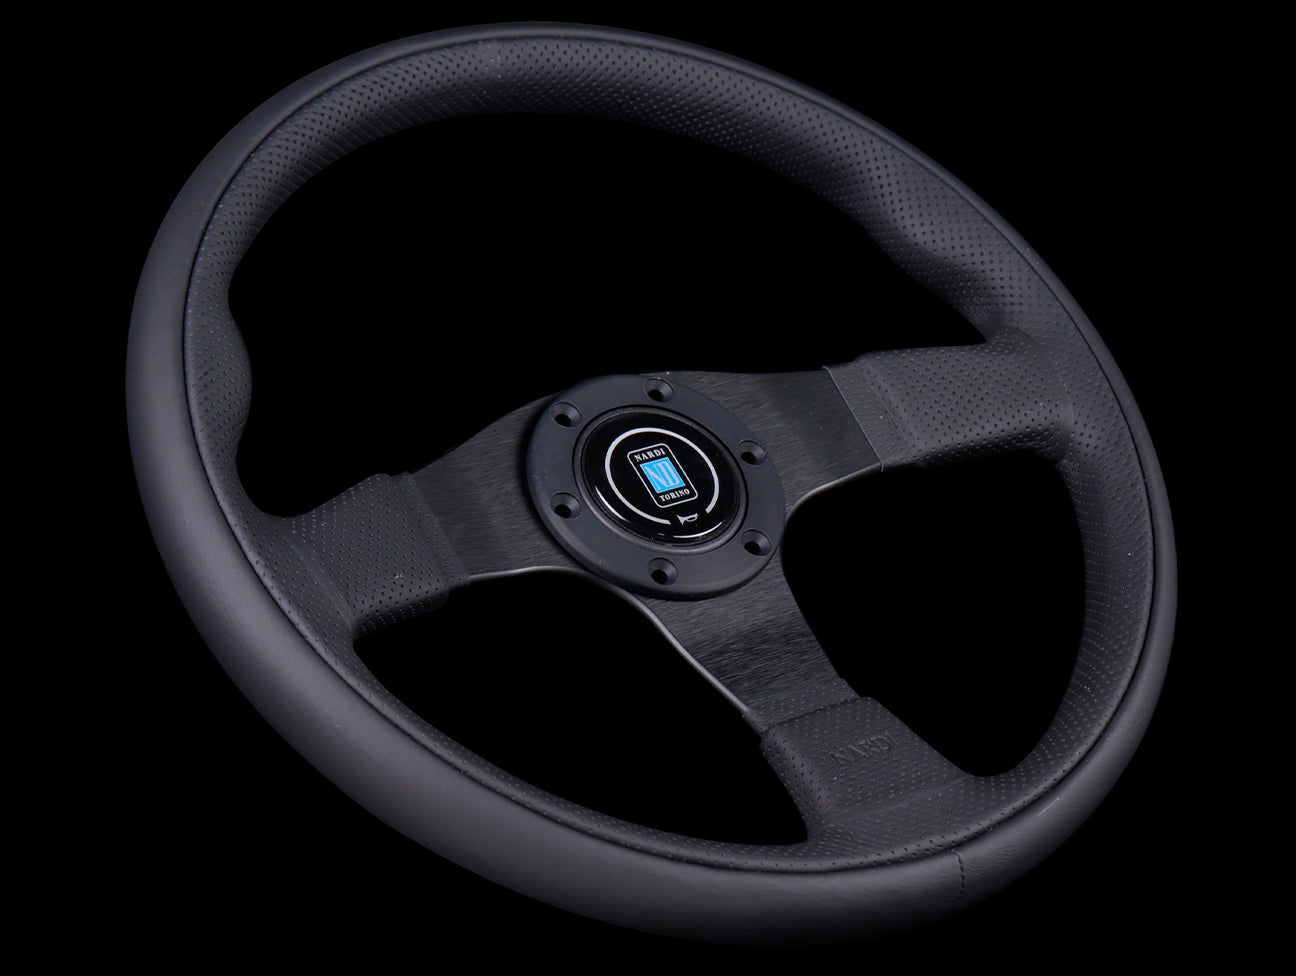 Nardi Twin Line 350mm Steering Wheel - Black Leather